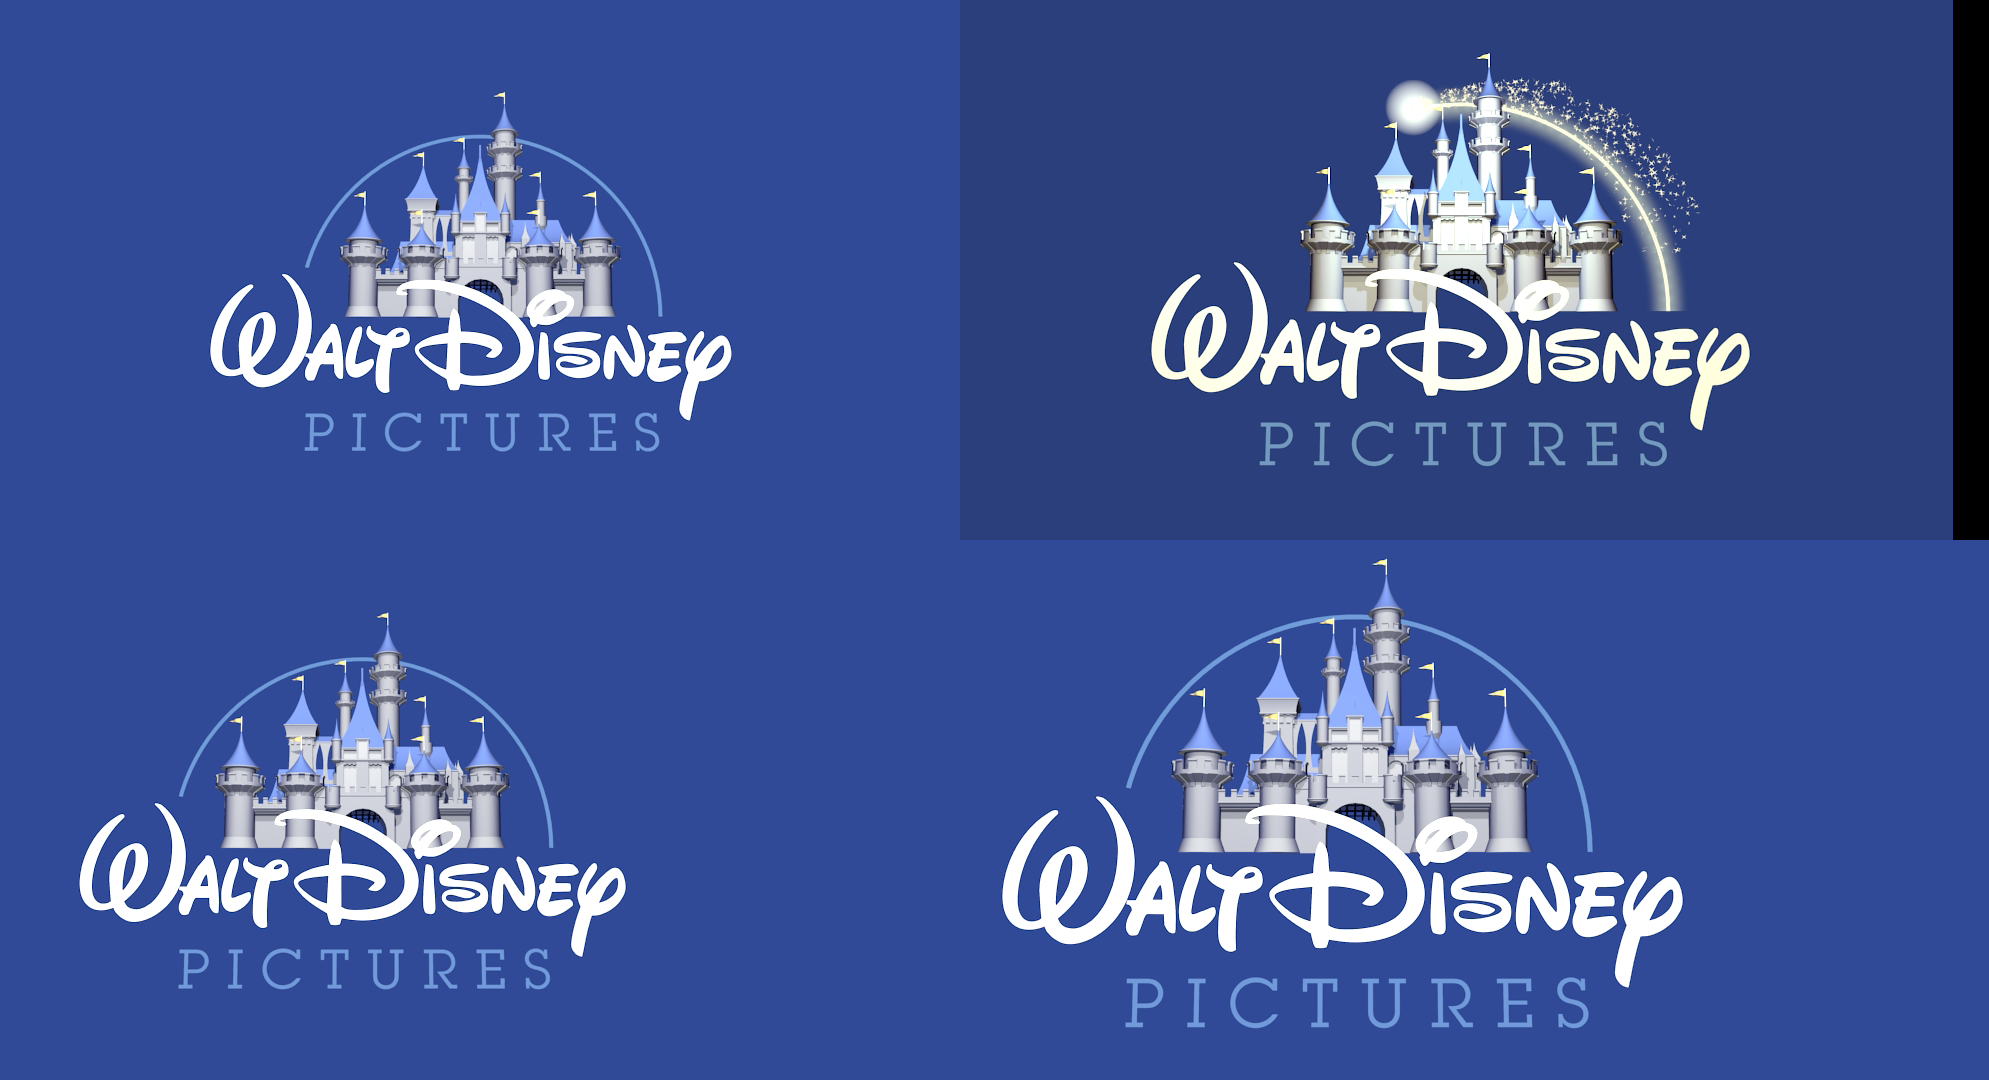 44 Top Pictures Walt Disney Pictures Movies Download / Walt Disney Pictures logo 1995 Pixar Remakes by Daffa916 ...